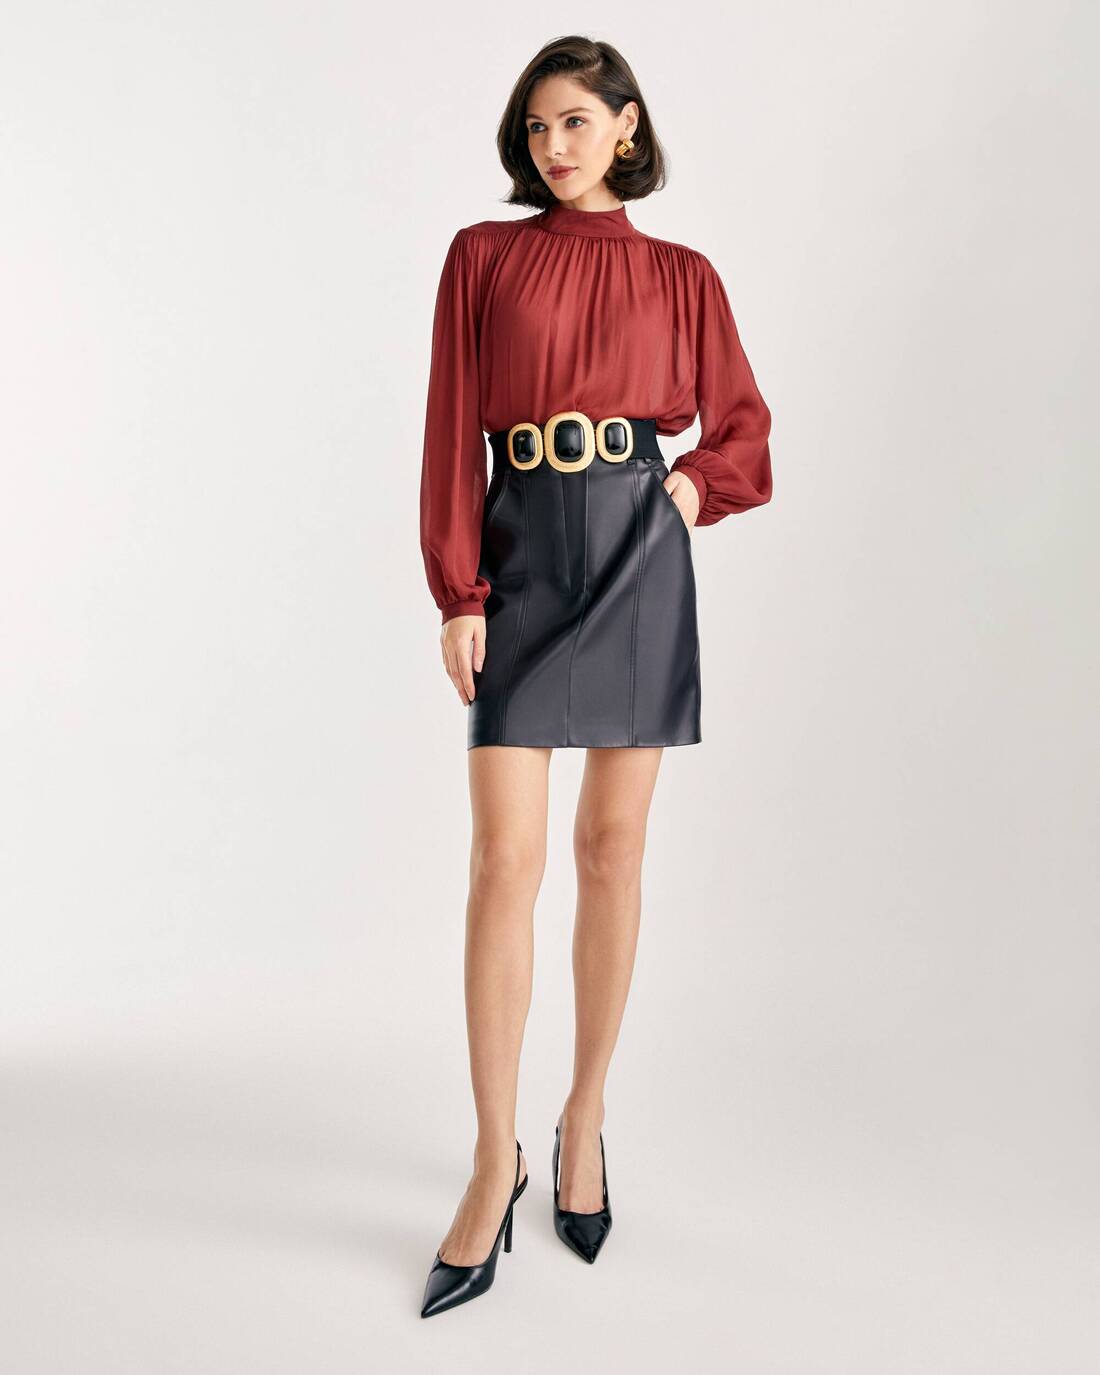 Eco-leather mini skirt